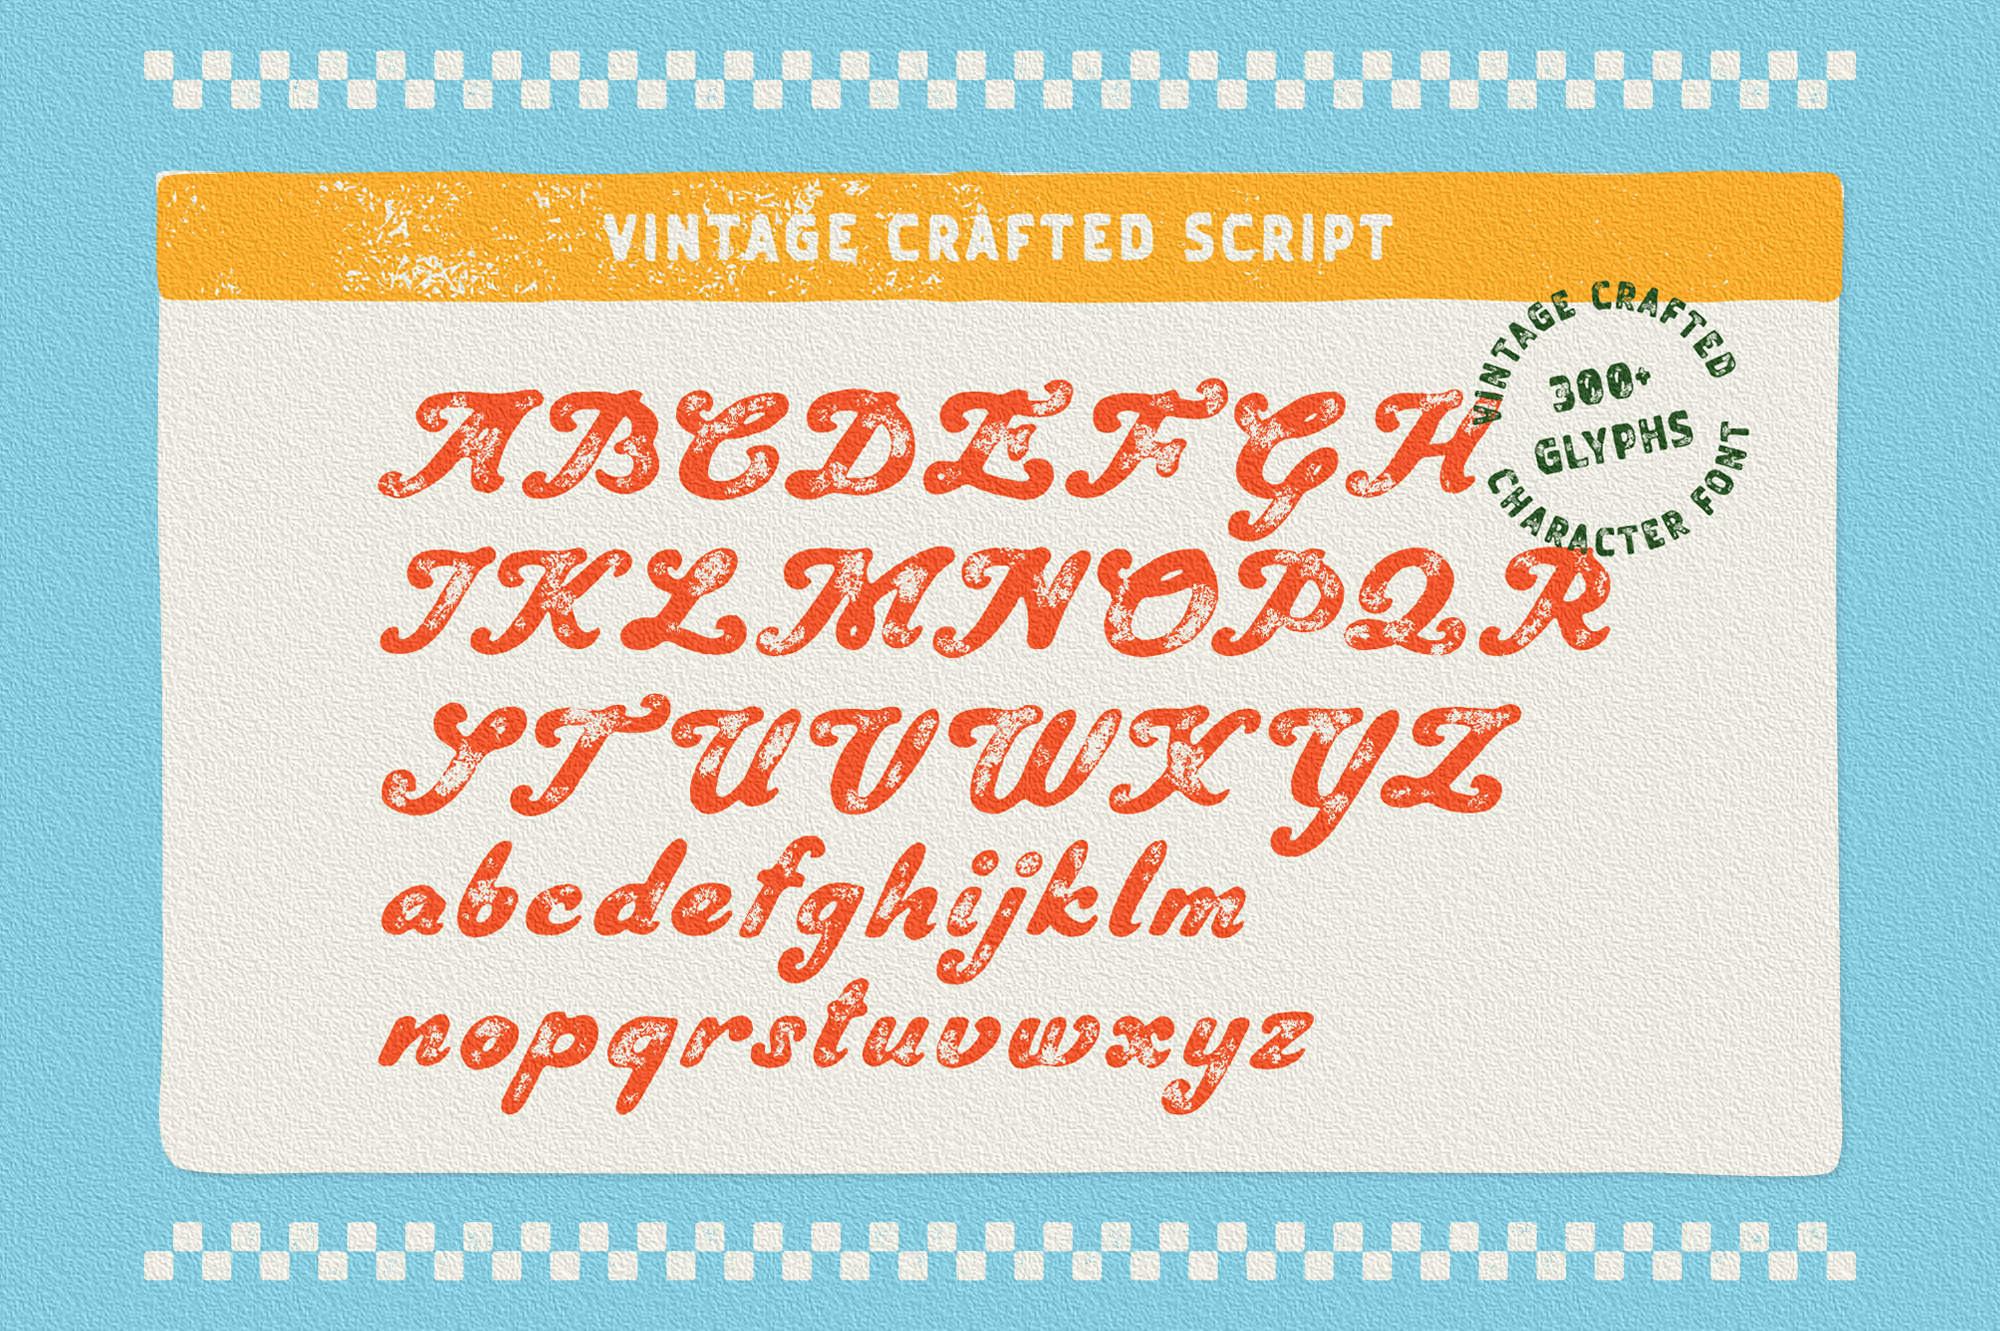 Vintage Crafted Script